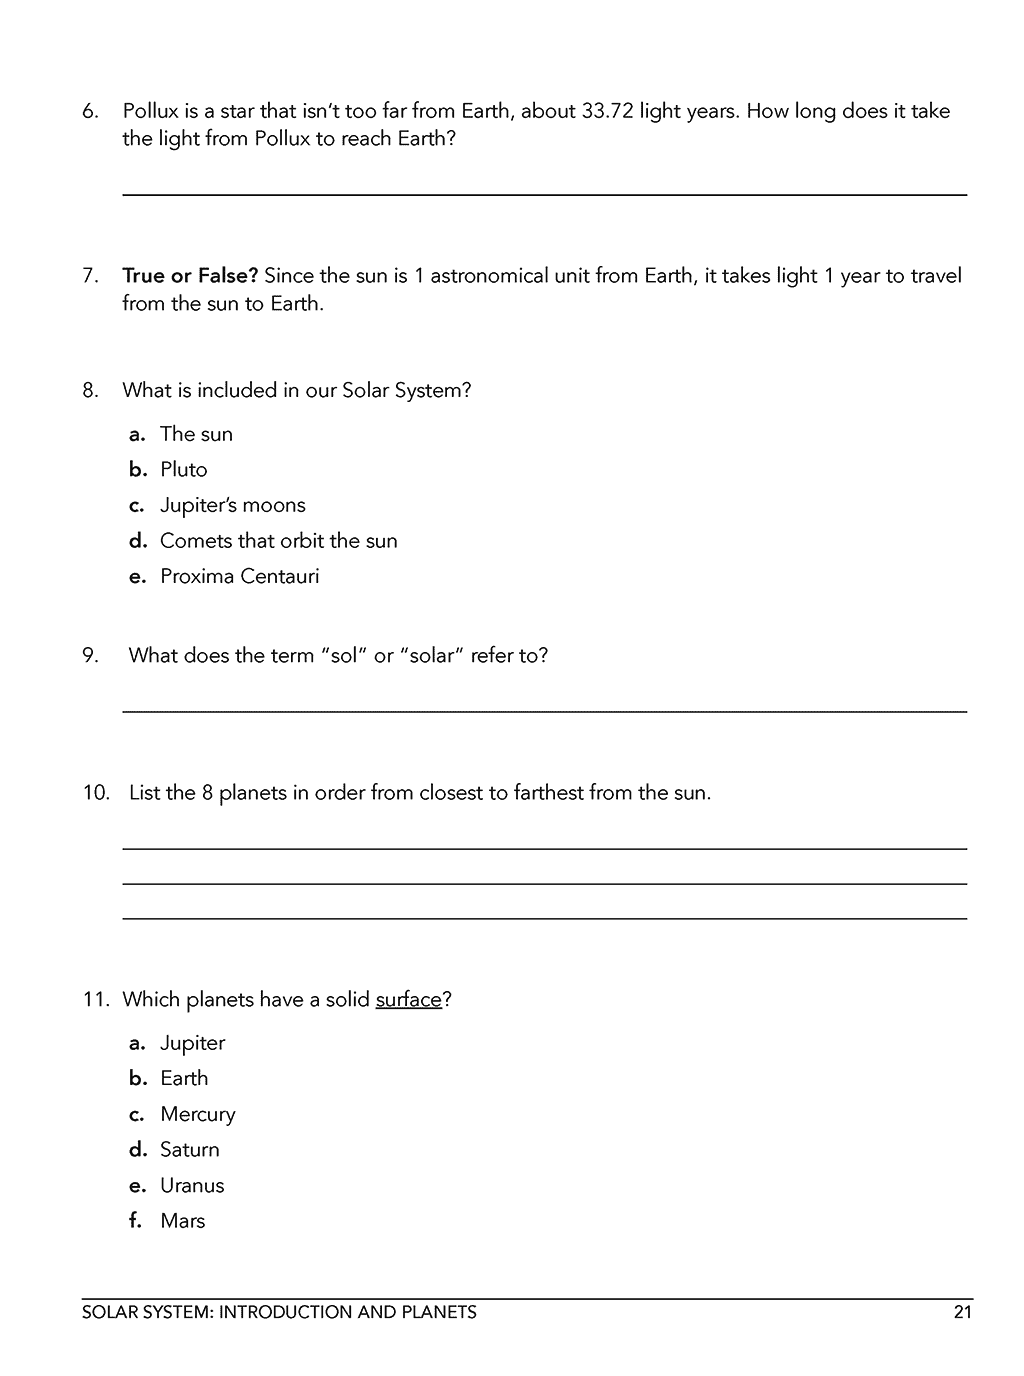 Christian astronomy curriculum Workbook Level B class 7 sample page 2